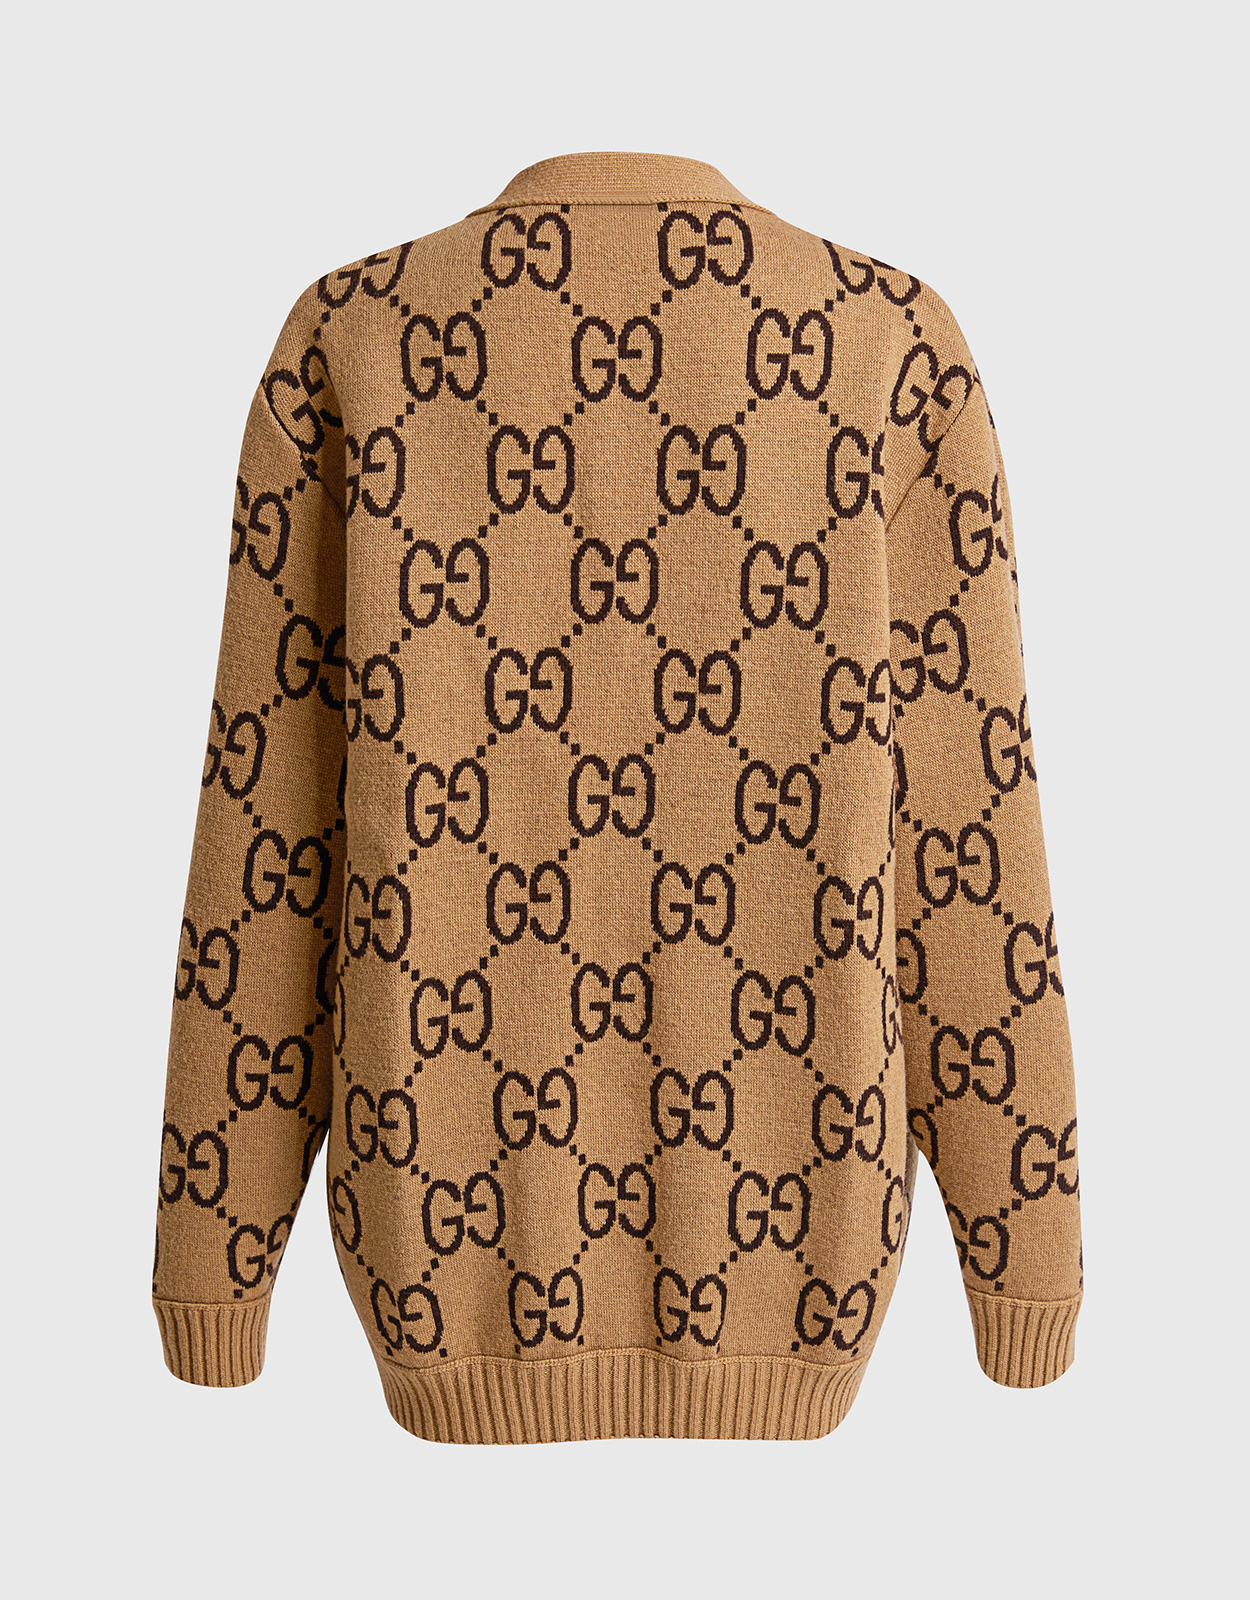 Gucci Reversible GG Knit Wool Cardigan (Knitwear,Cardigans) IFCHIC.COM